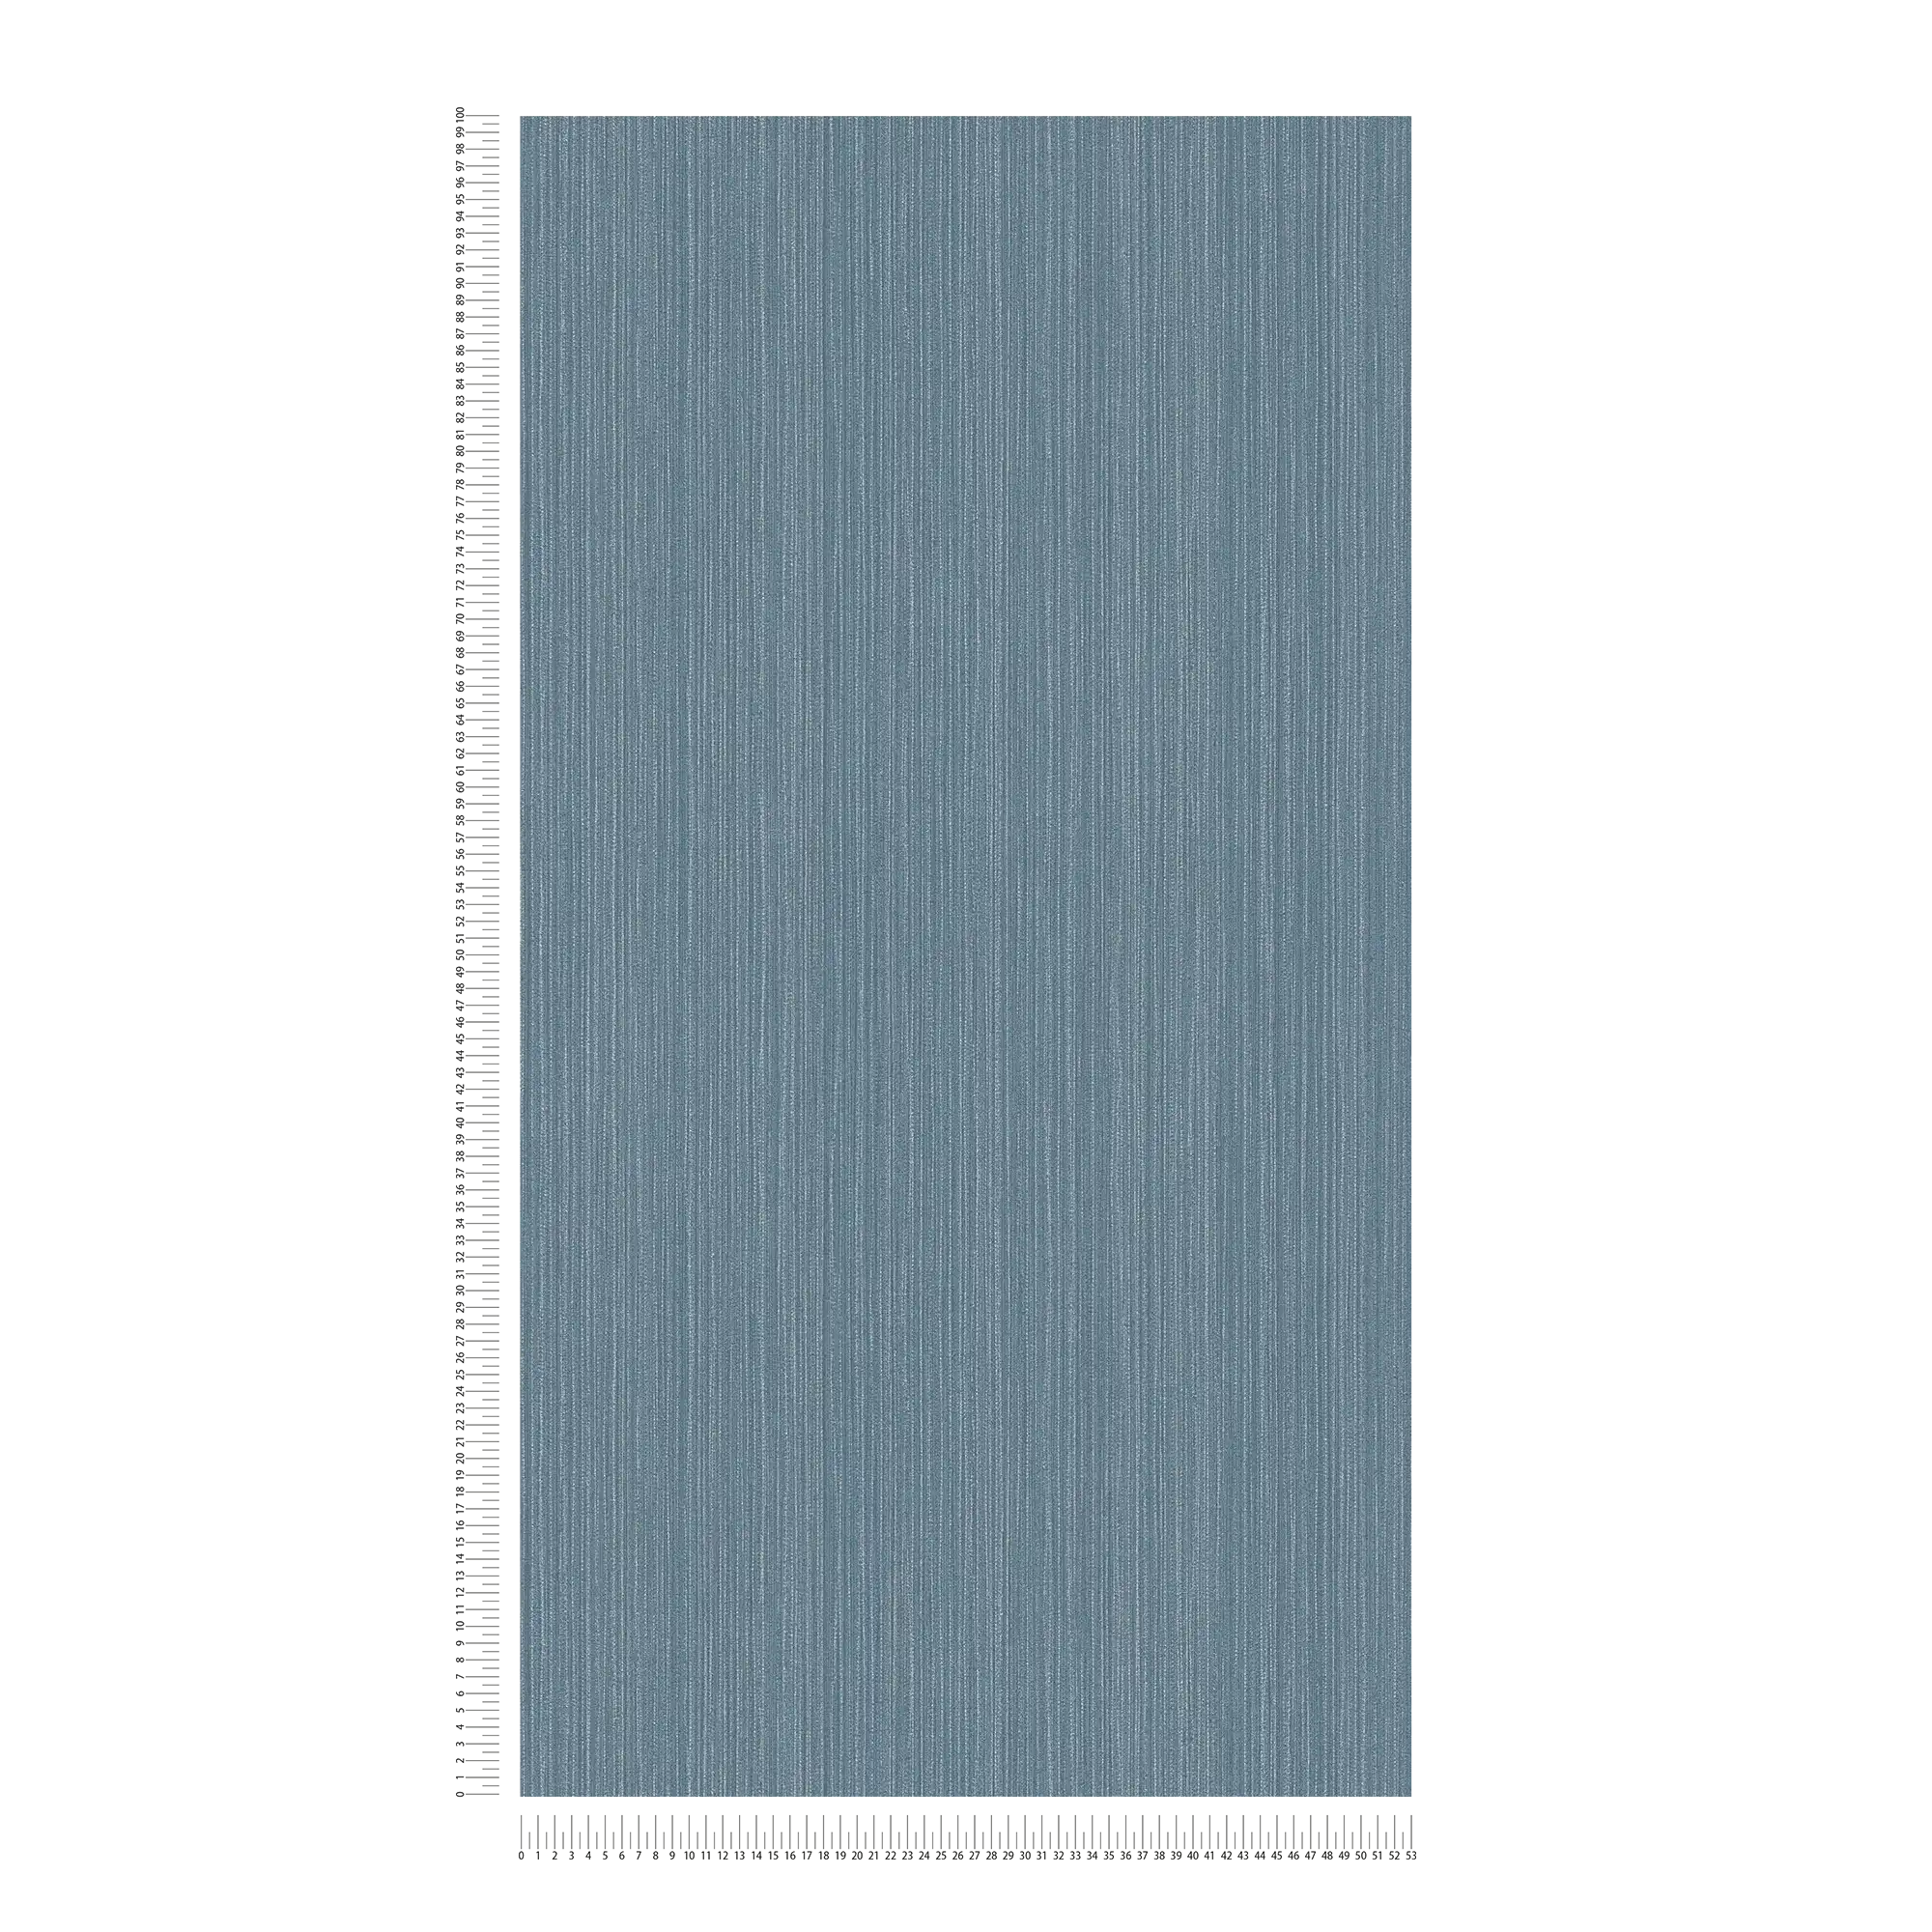             Plain wallpaper with grey-blue textile look - blue, metallic
        